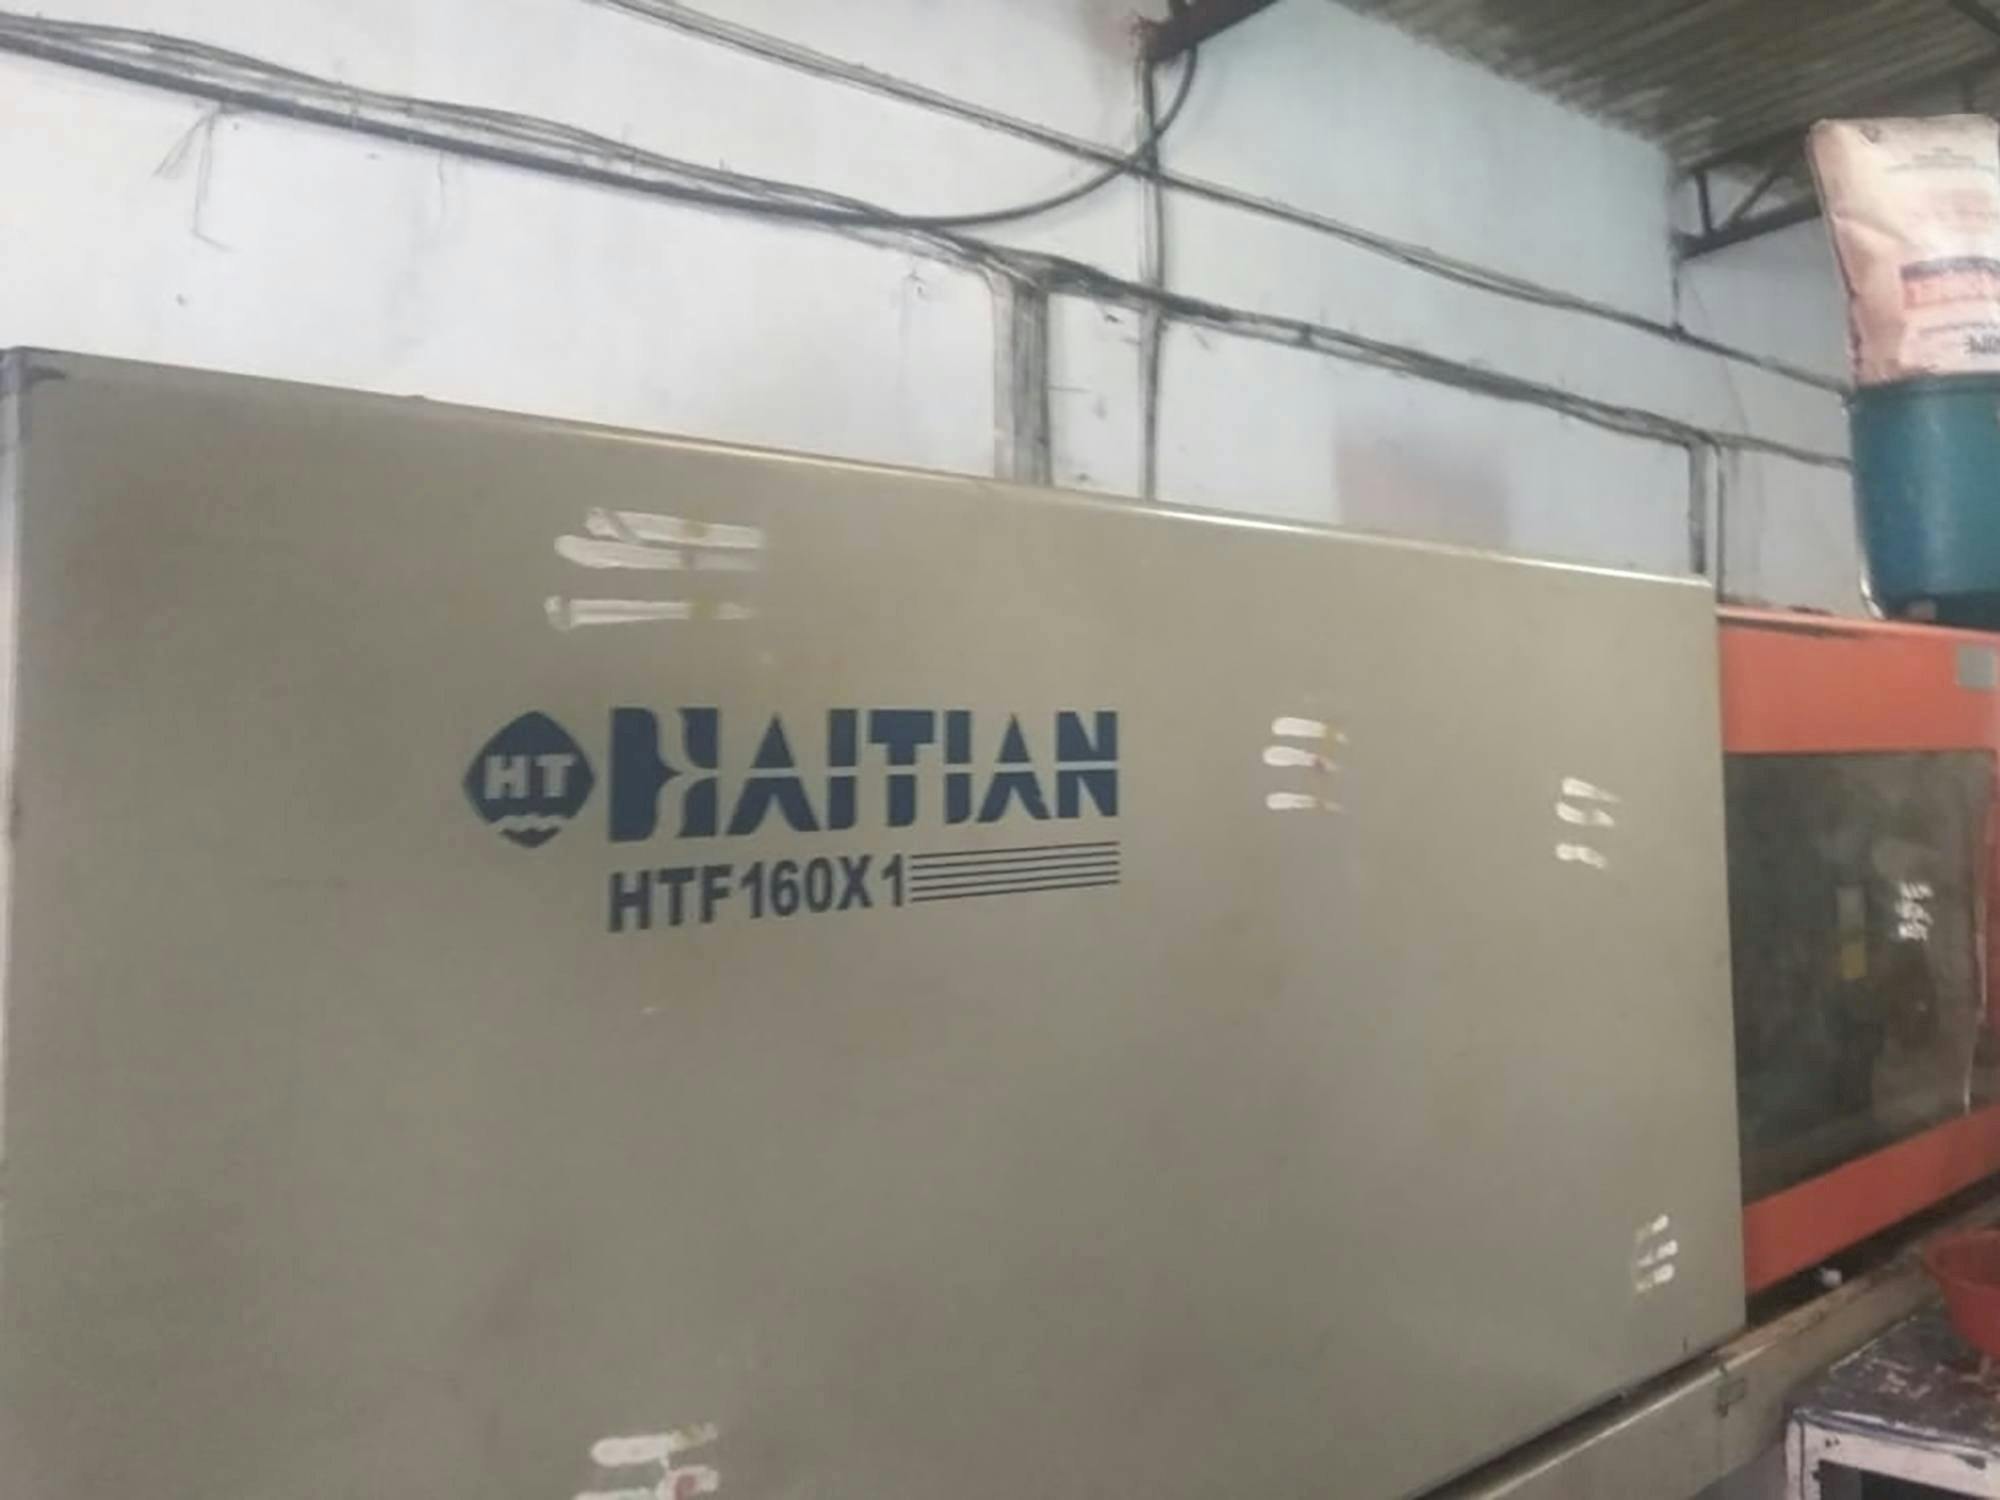 HAITIAN-maskinen framifrånHTF160X1